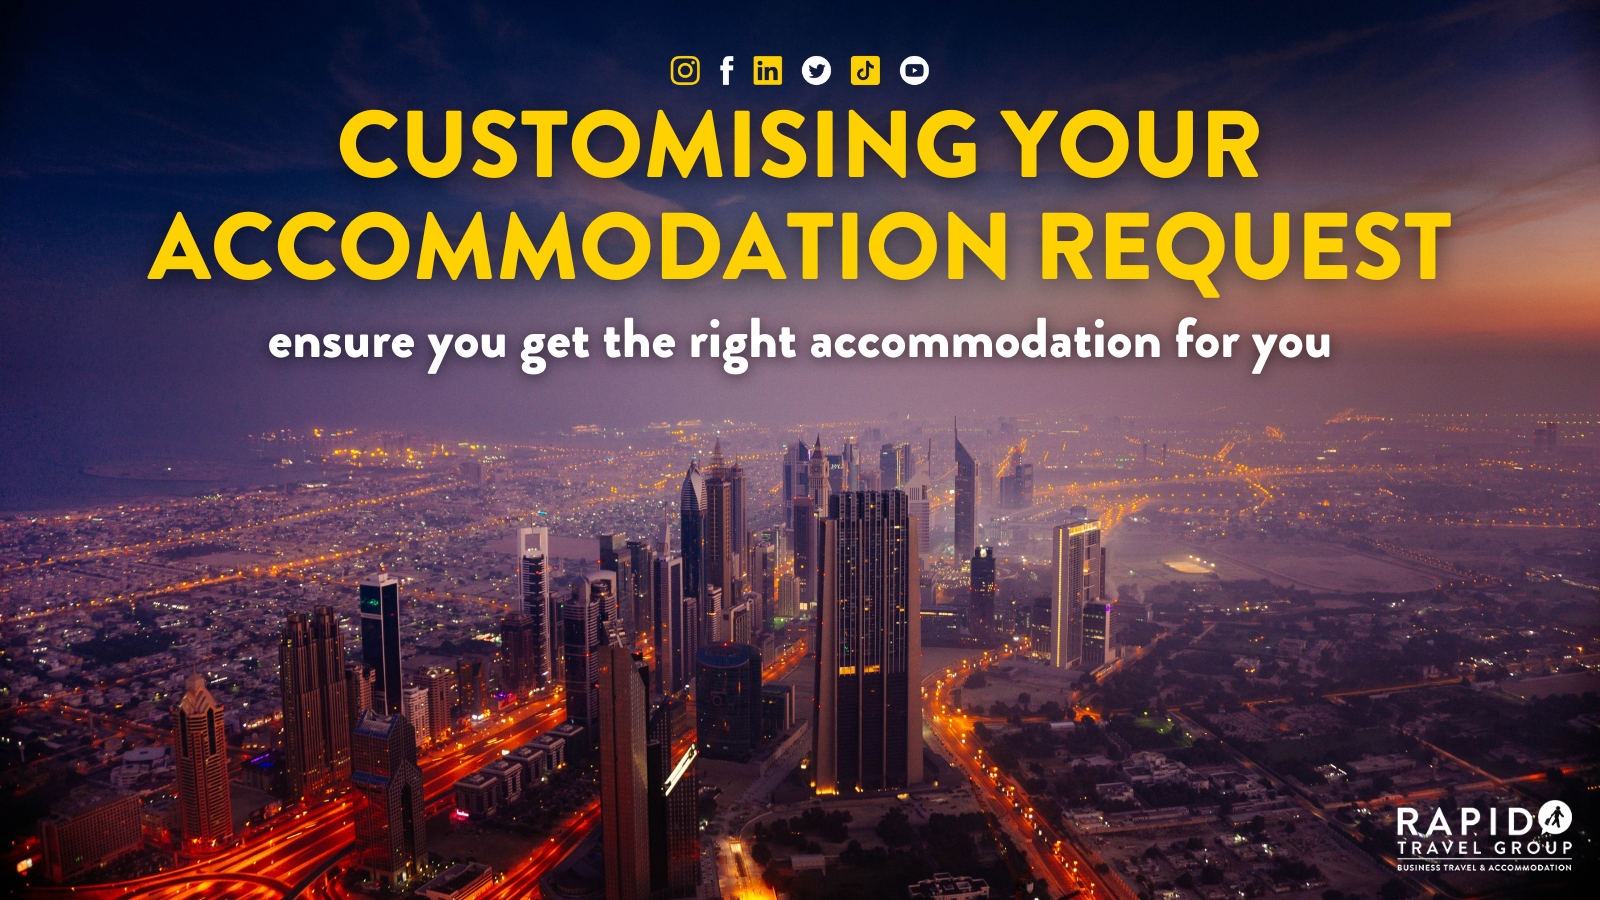 Customising your accommodation